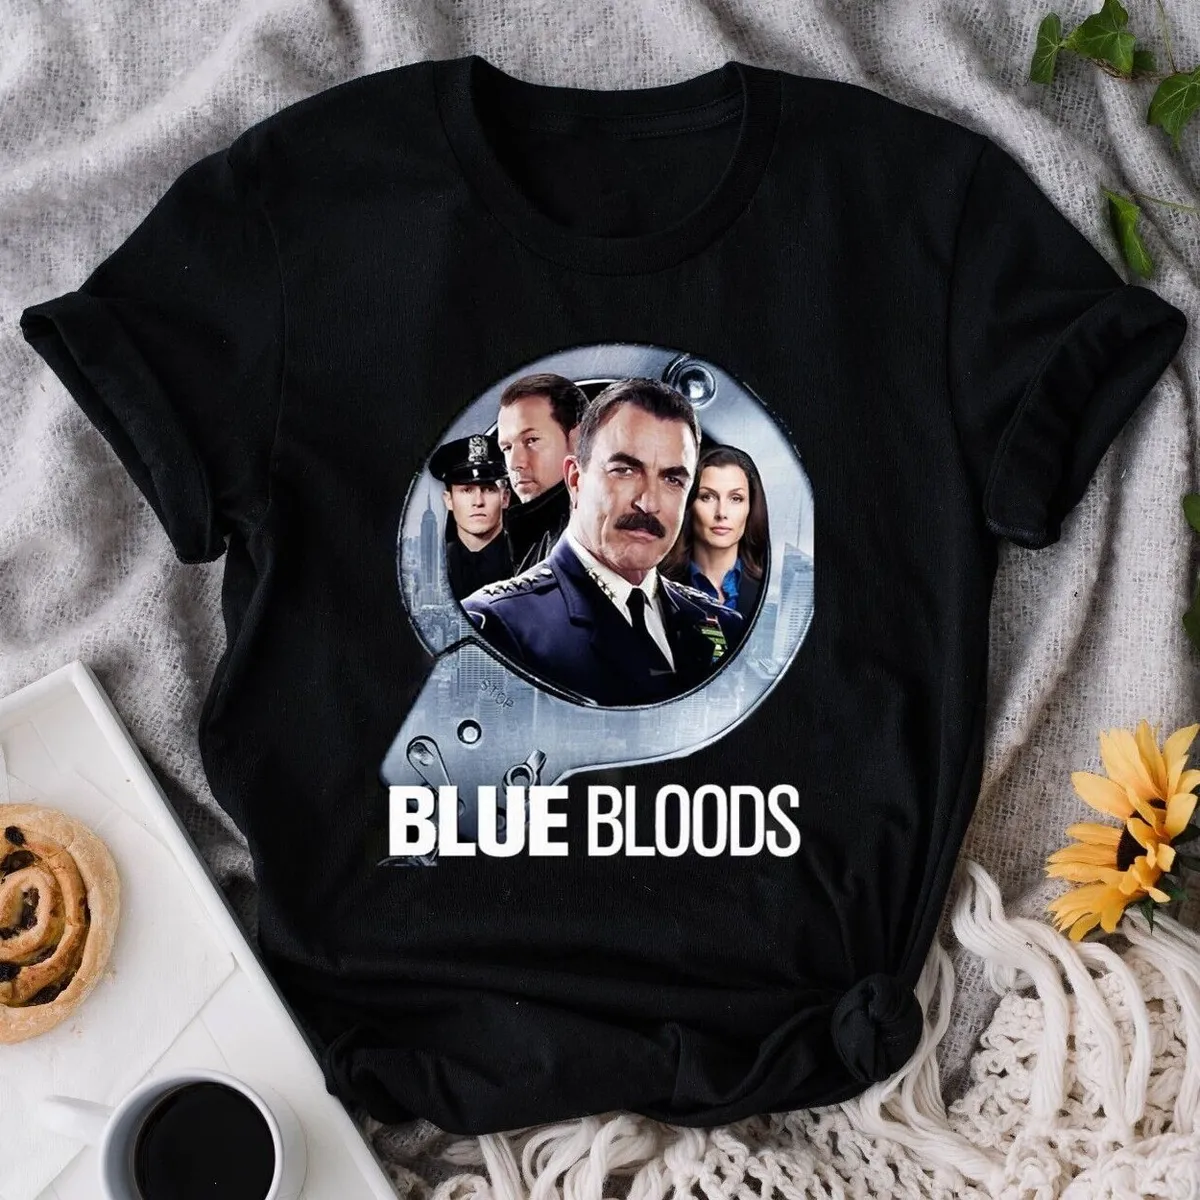 Beliebt 100 % Blue Bloods Movie Reagan Cop Family Wahlberg Donnie T- Gift Shirt Fan Selleck Tom | eBay